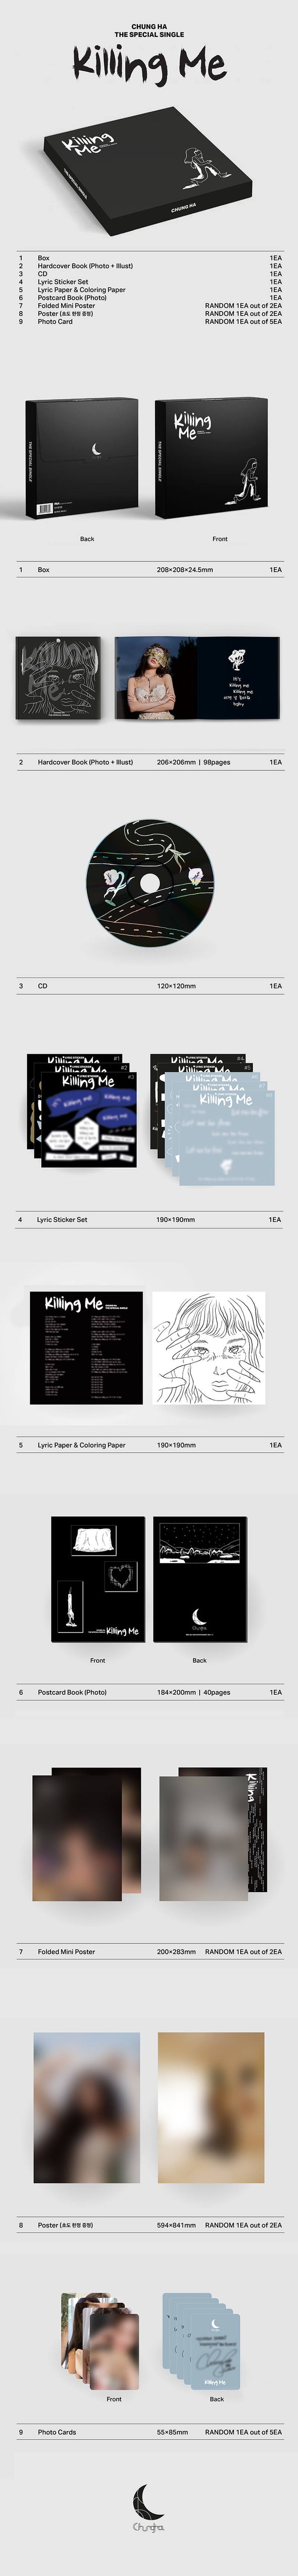 CHUNGHA - 'Killing Me' The Special Single Album